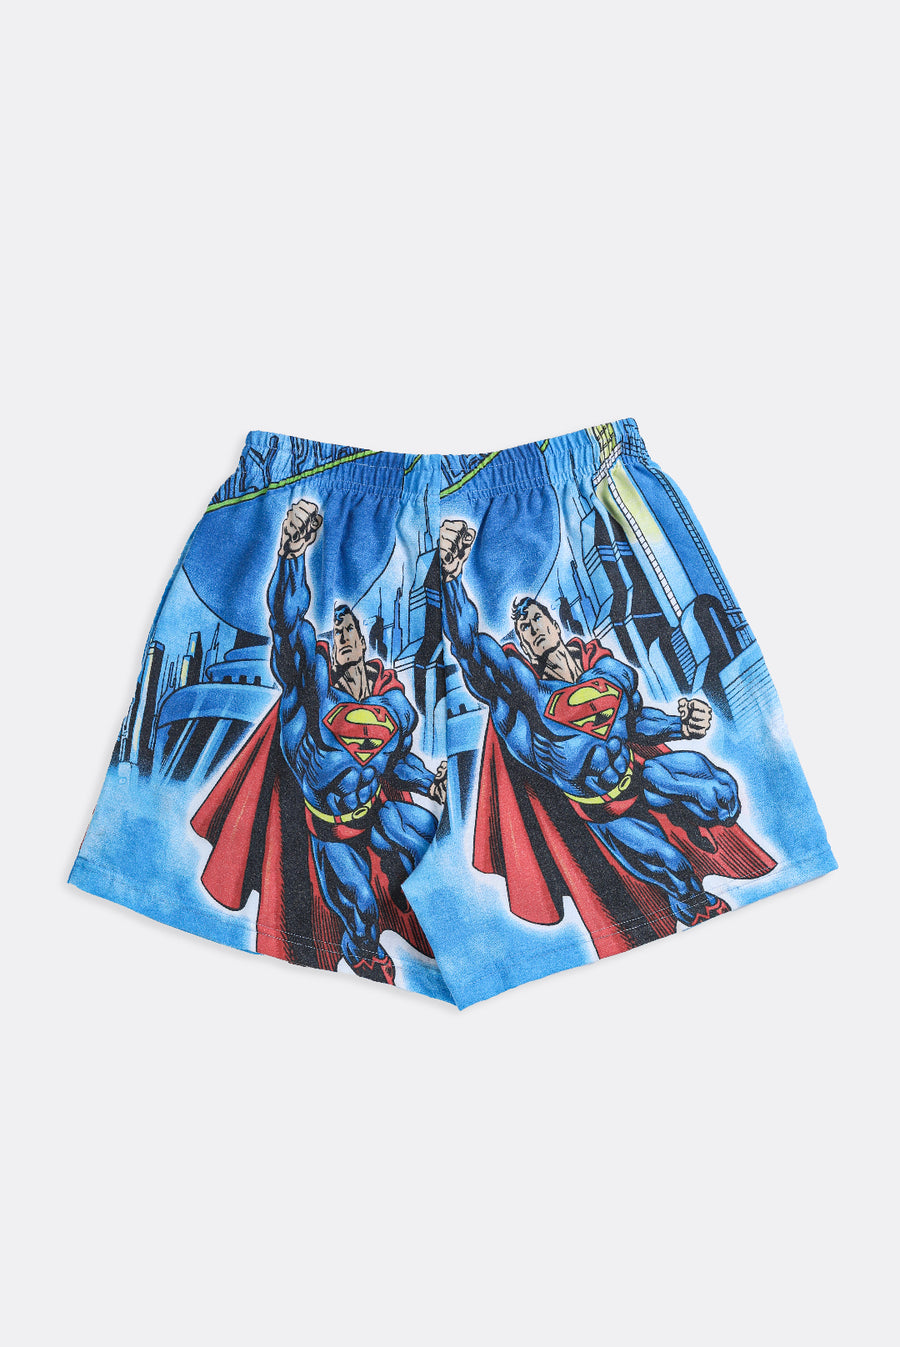 Unisex Rework Superman Boxer Shorts - XS, S